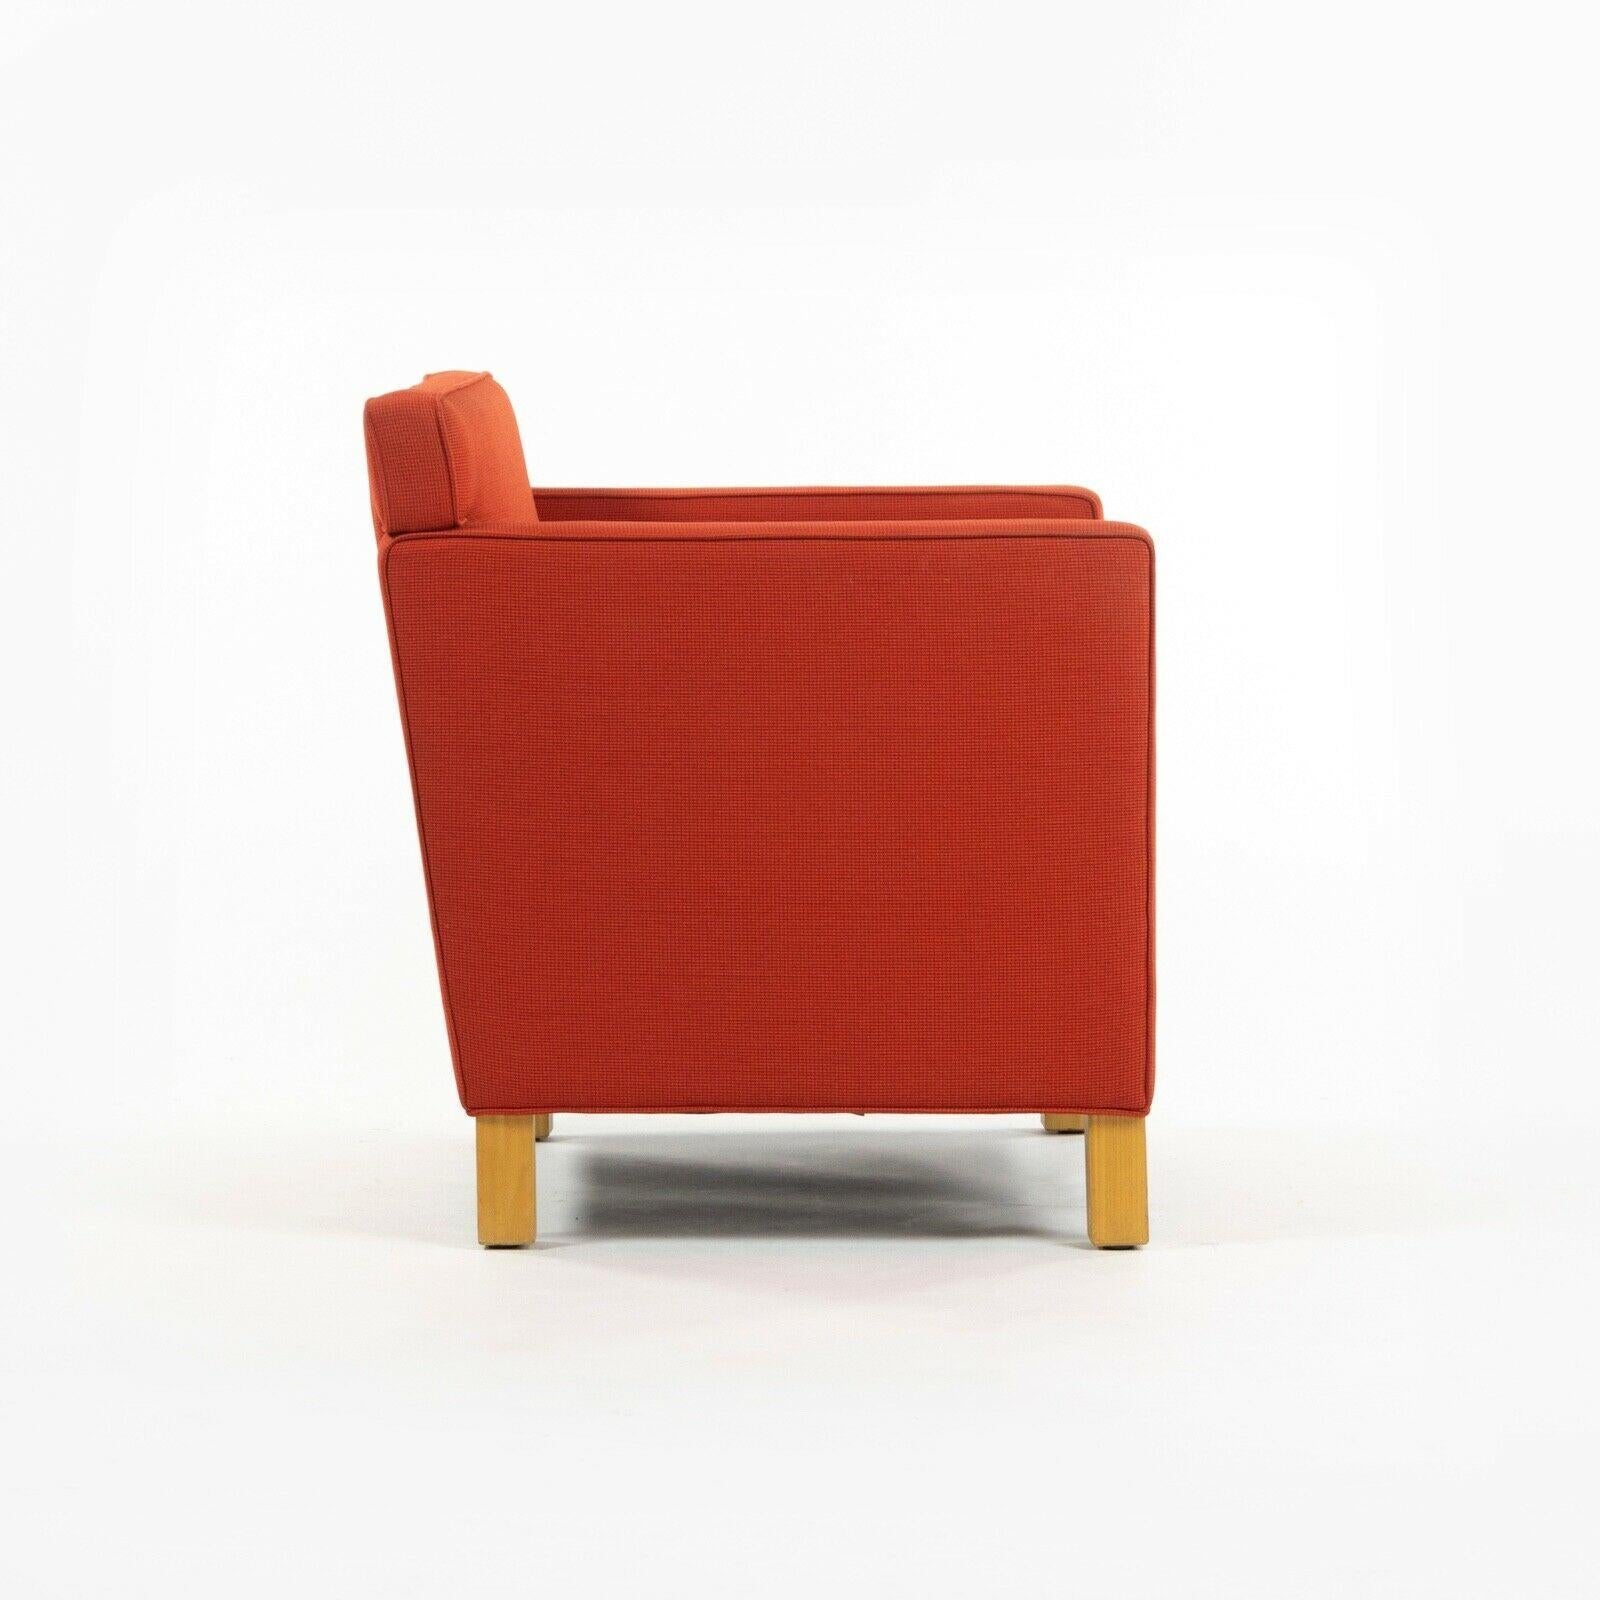 Modern 2010s Pair Original Knoll Mies Van Der Rohe Krefeld Lounge Chair Orange Fabric